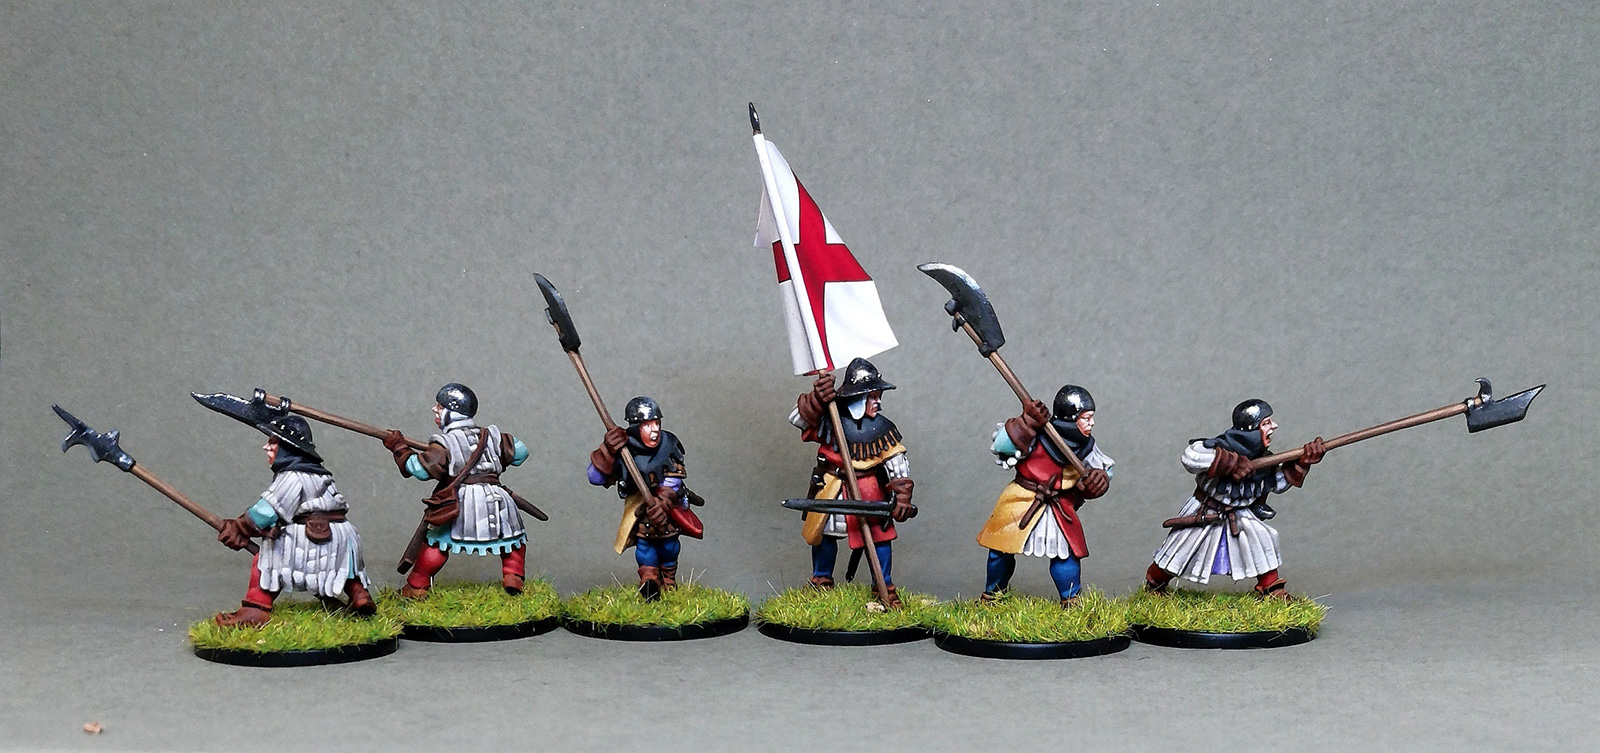 Figures: English warriors, Hundred Years' War, photo #1